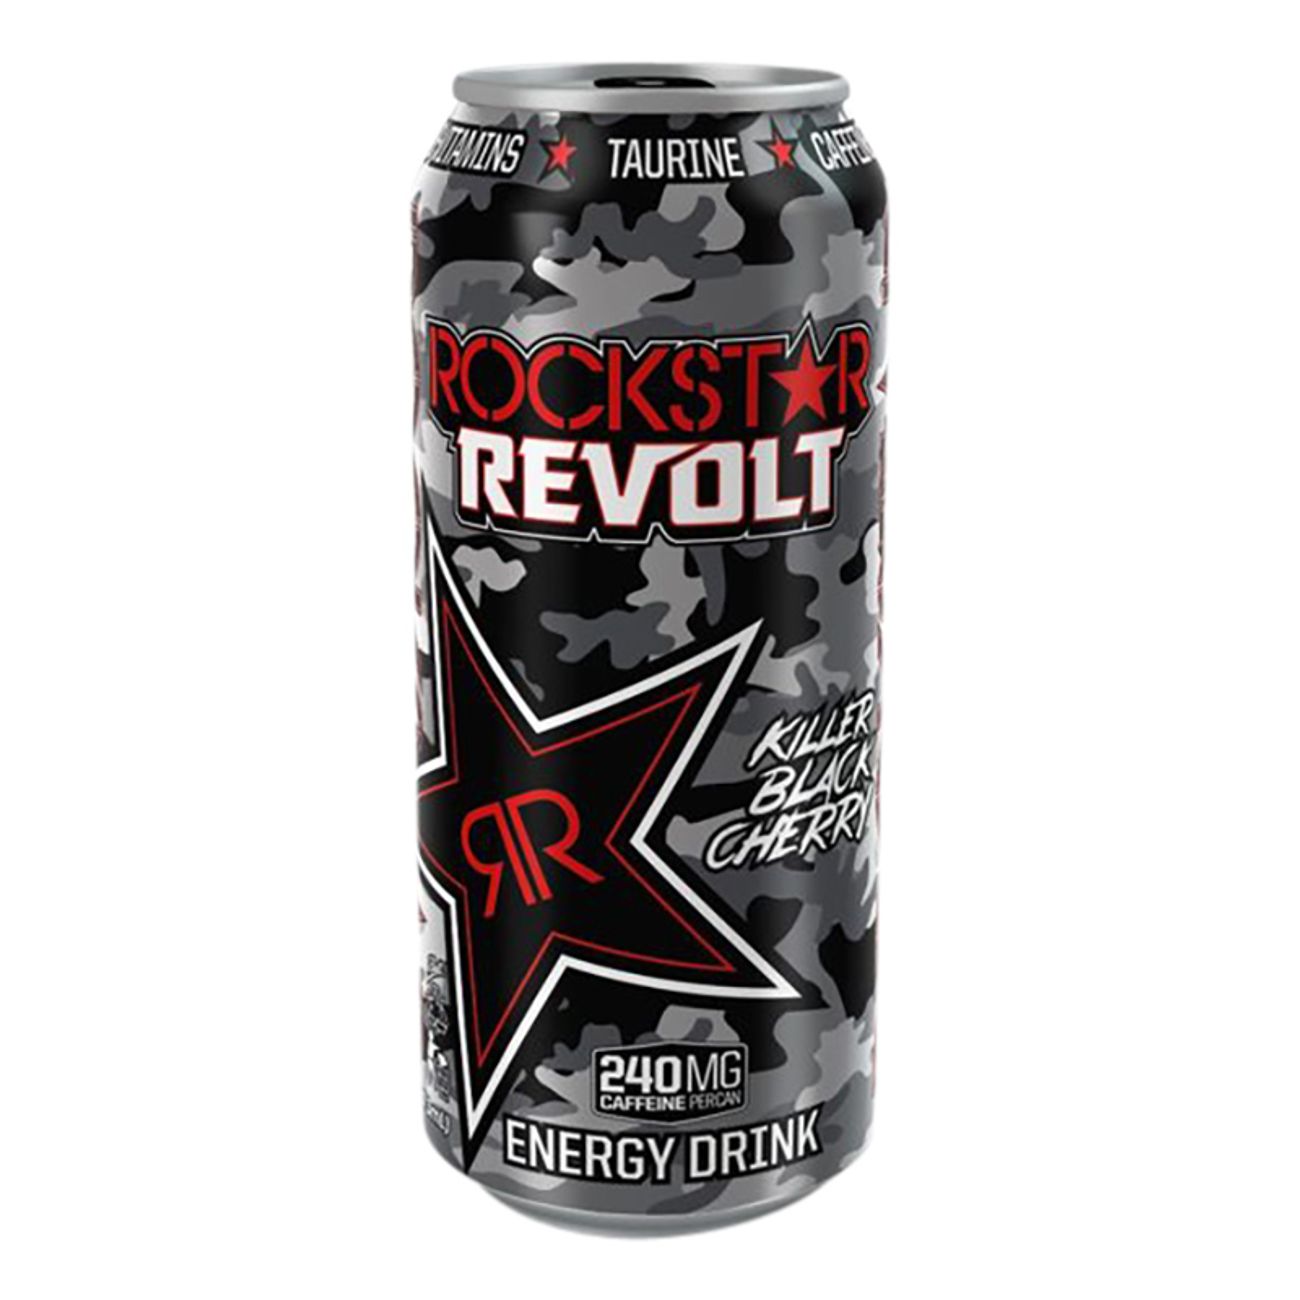 rockstar-revolt-killer-cooler-zero-4